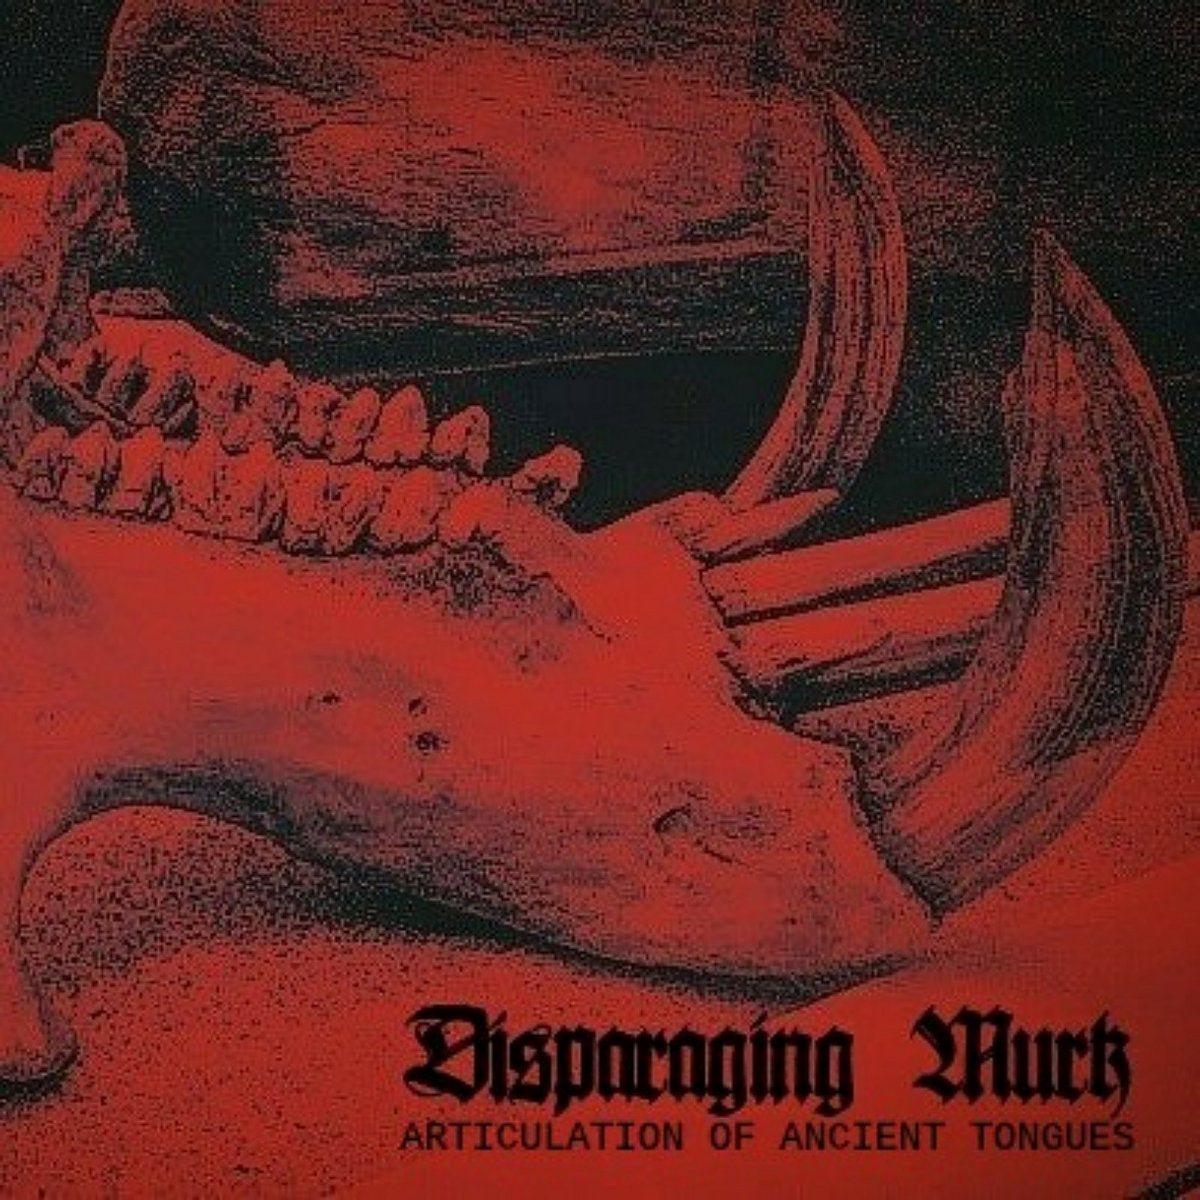 Disparaging Murk - Articulation of Ancient Tongues [Black Metal] (Self-Released - Tape - 8/15/18)